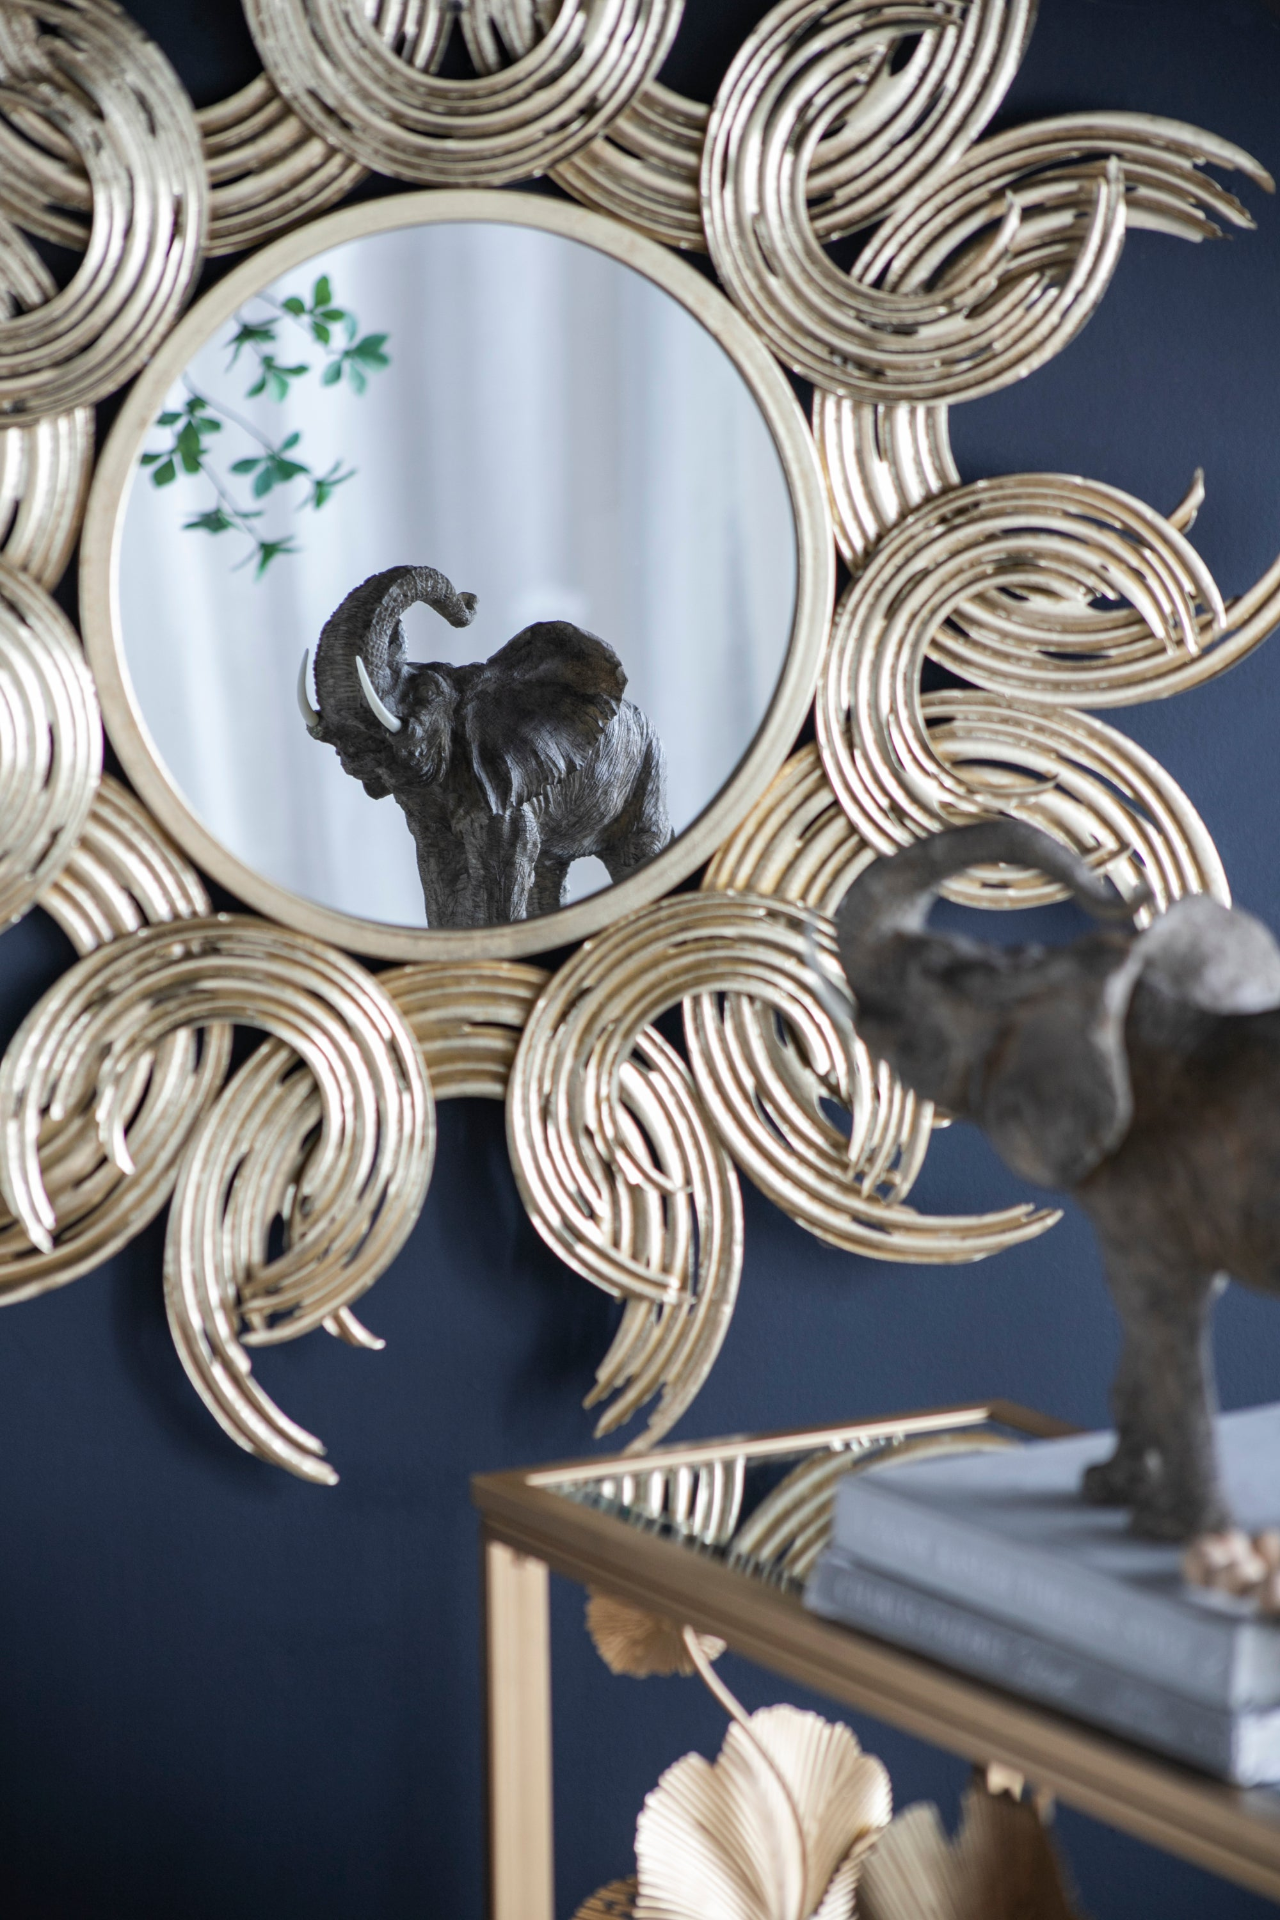 38"Boho Wall Sunburst Metal Decorative Mirror w/Gold Finish